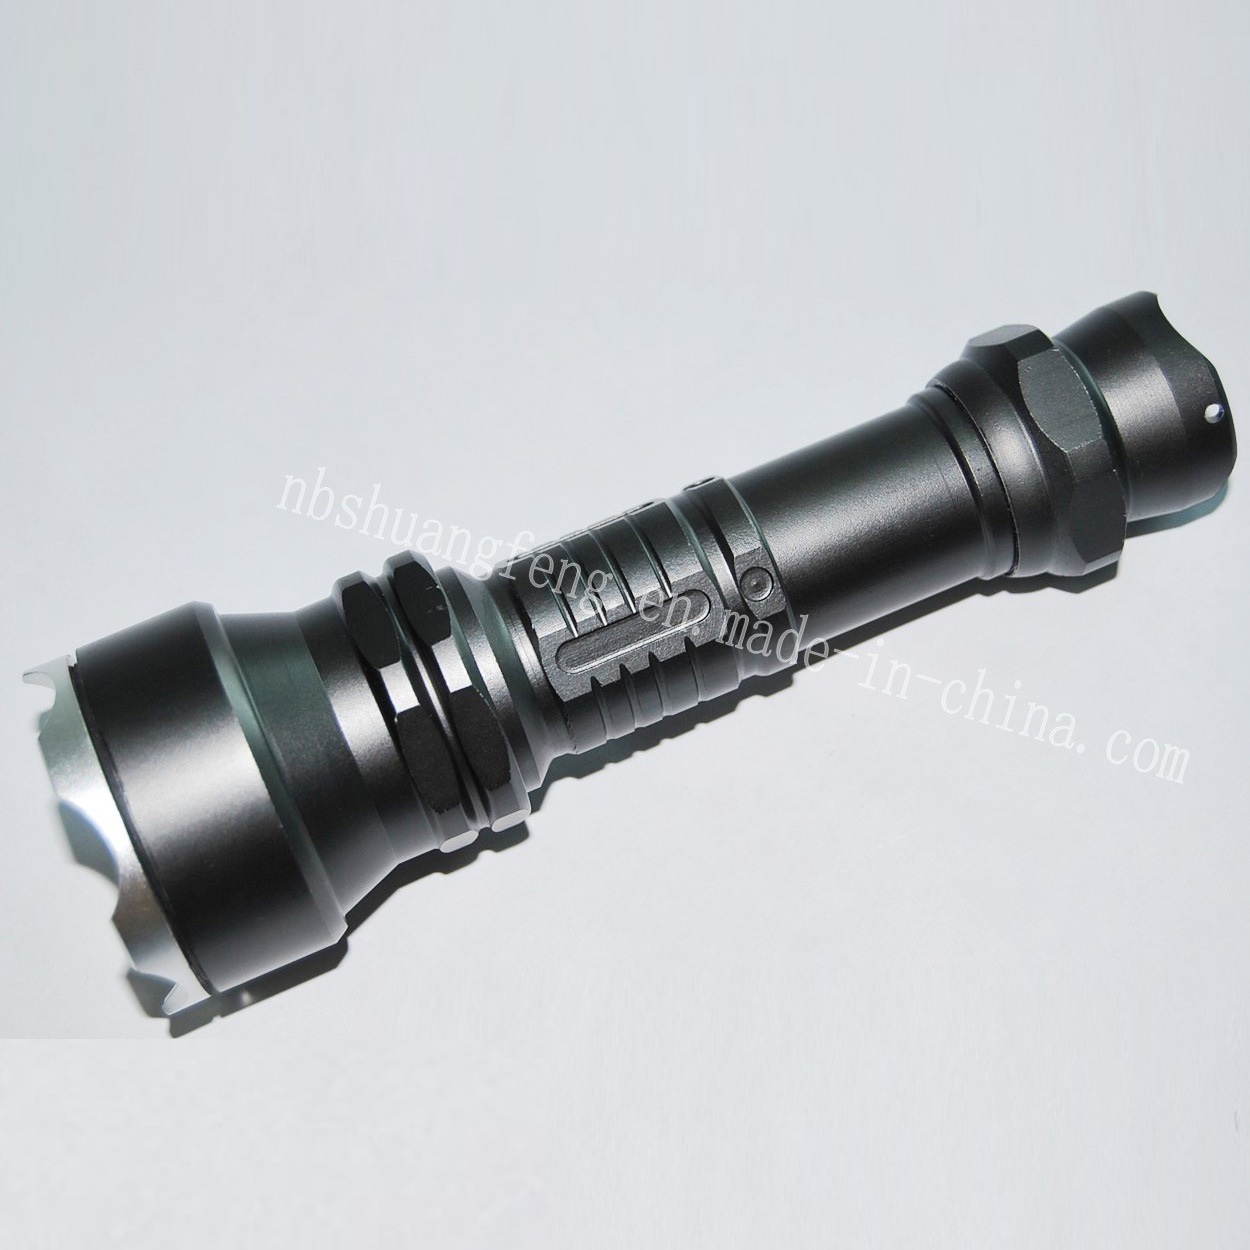 CREE T6/Q5 Aluminum LED Flashlight (SF-116)